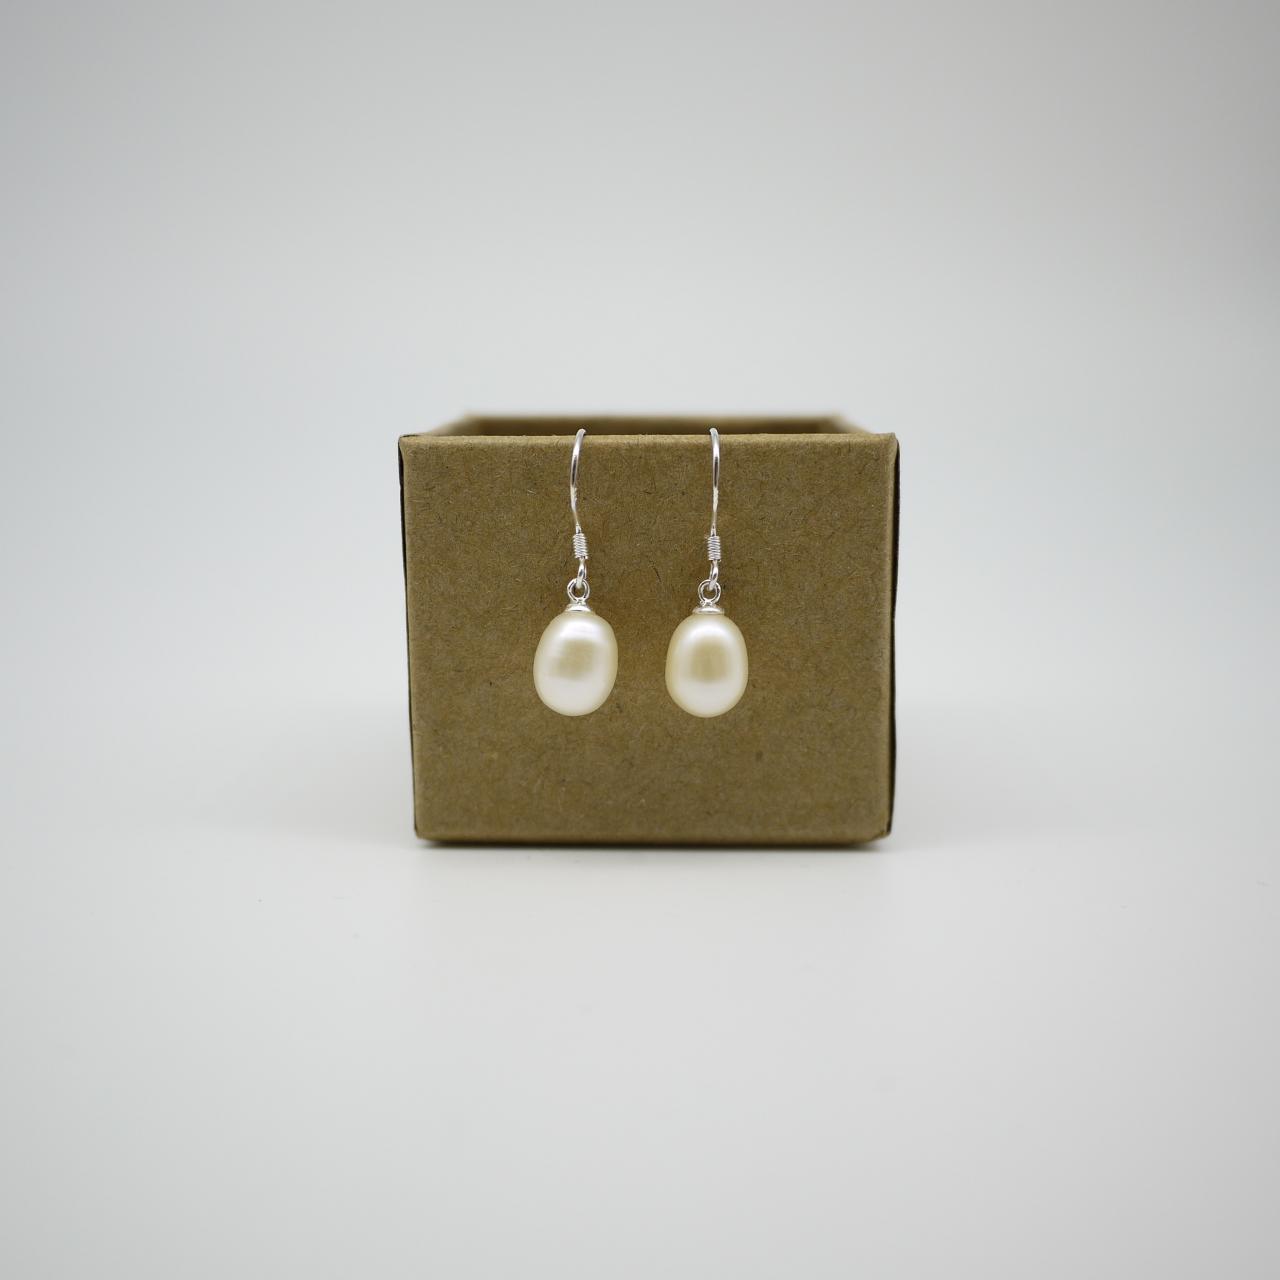 Simply Earrings - Freshwater Pearl Drop Earrings - White